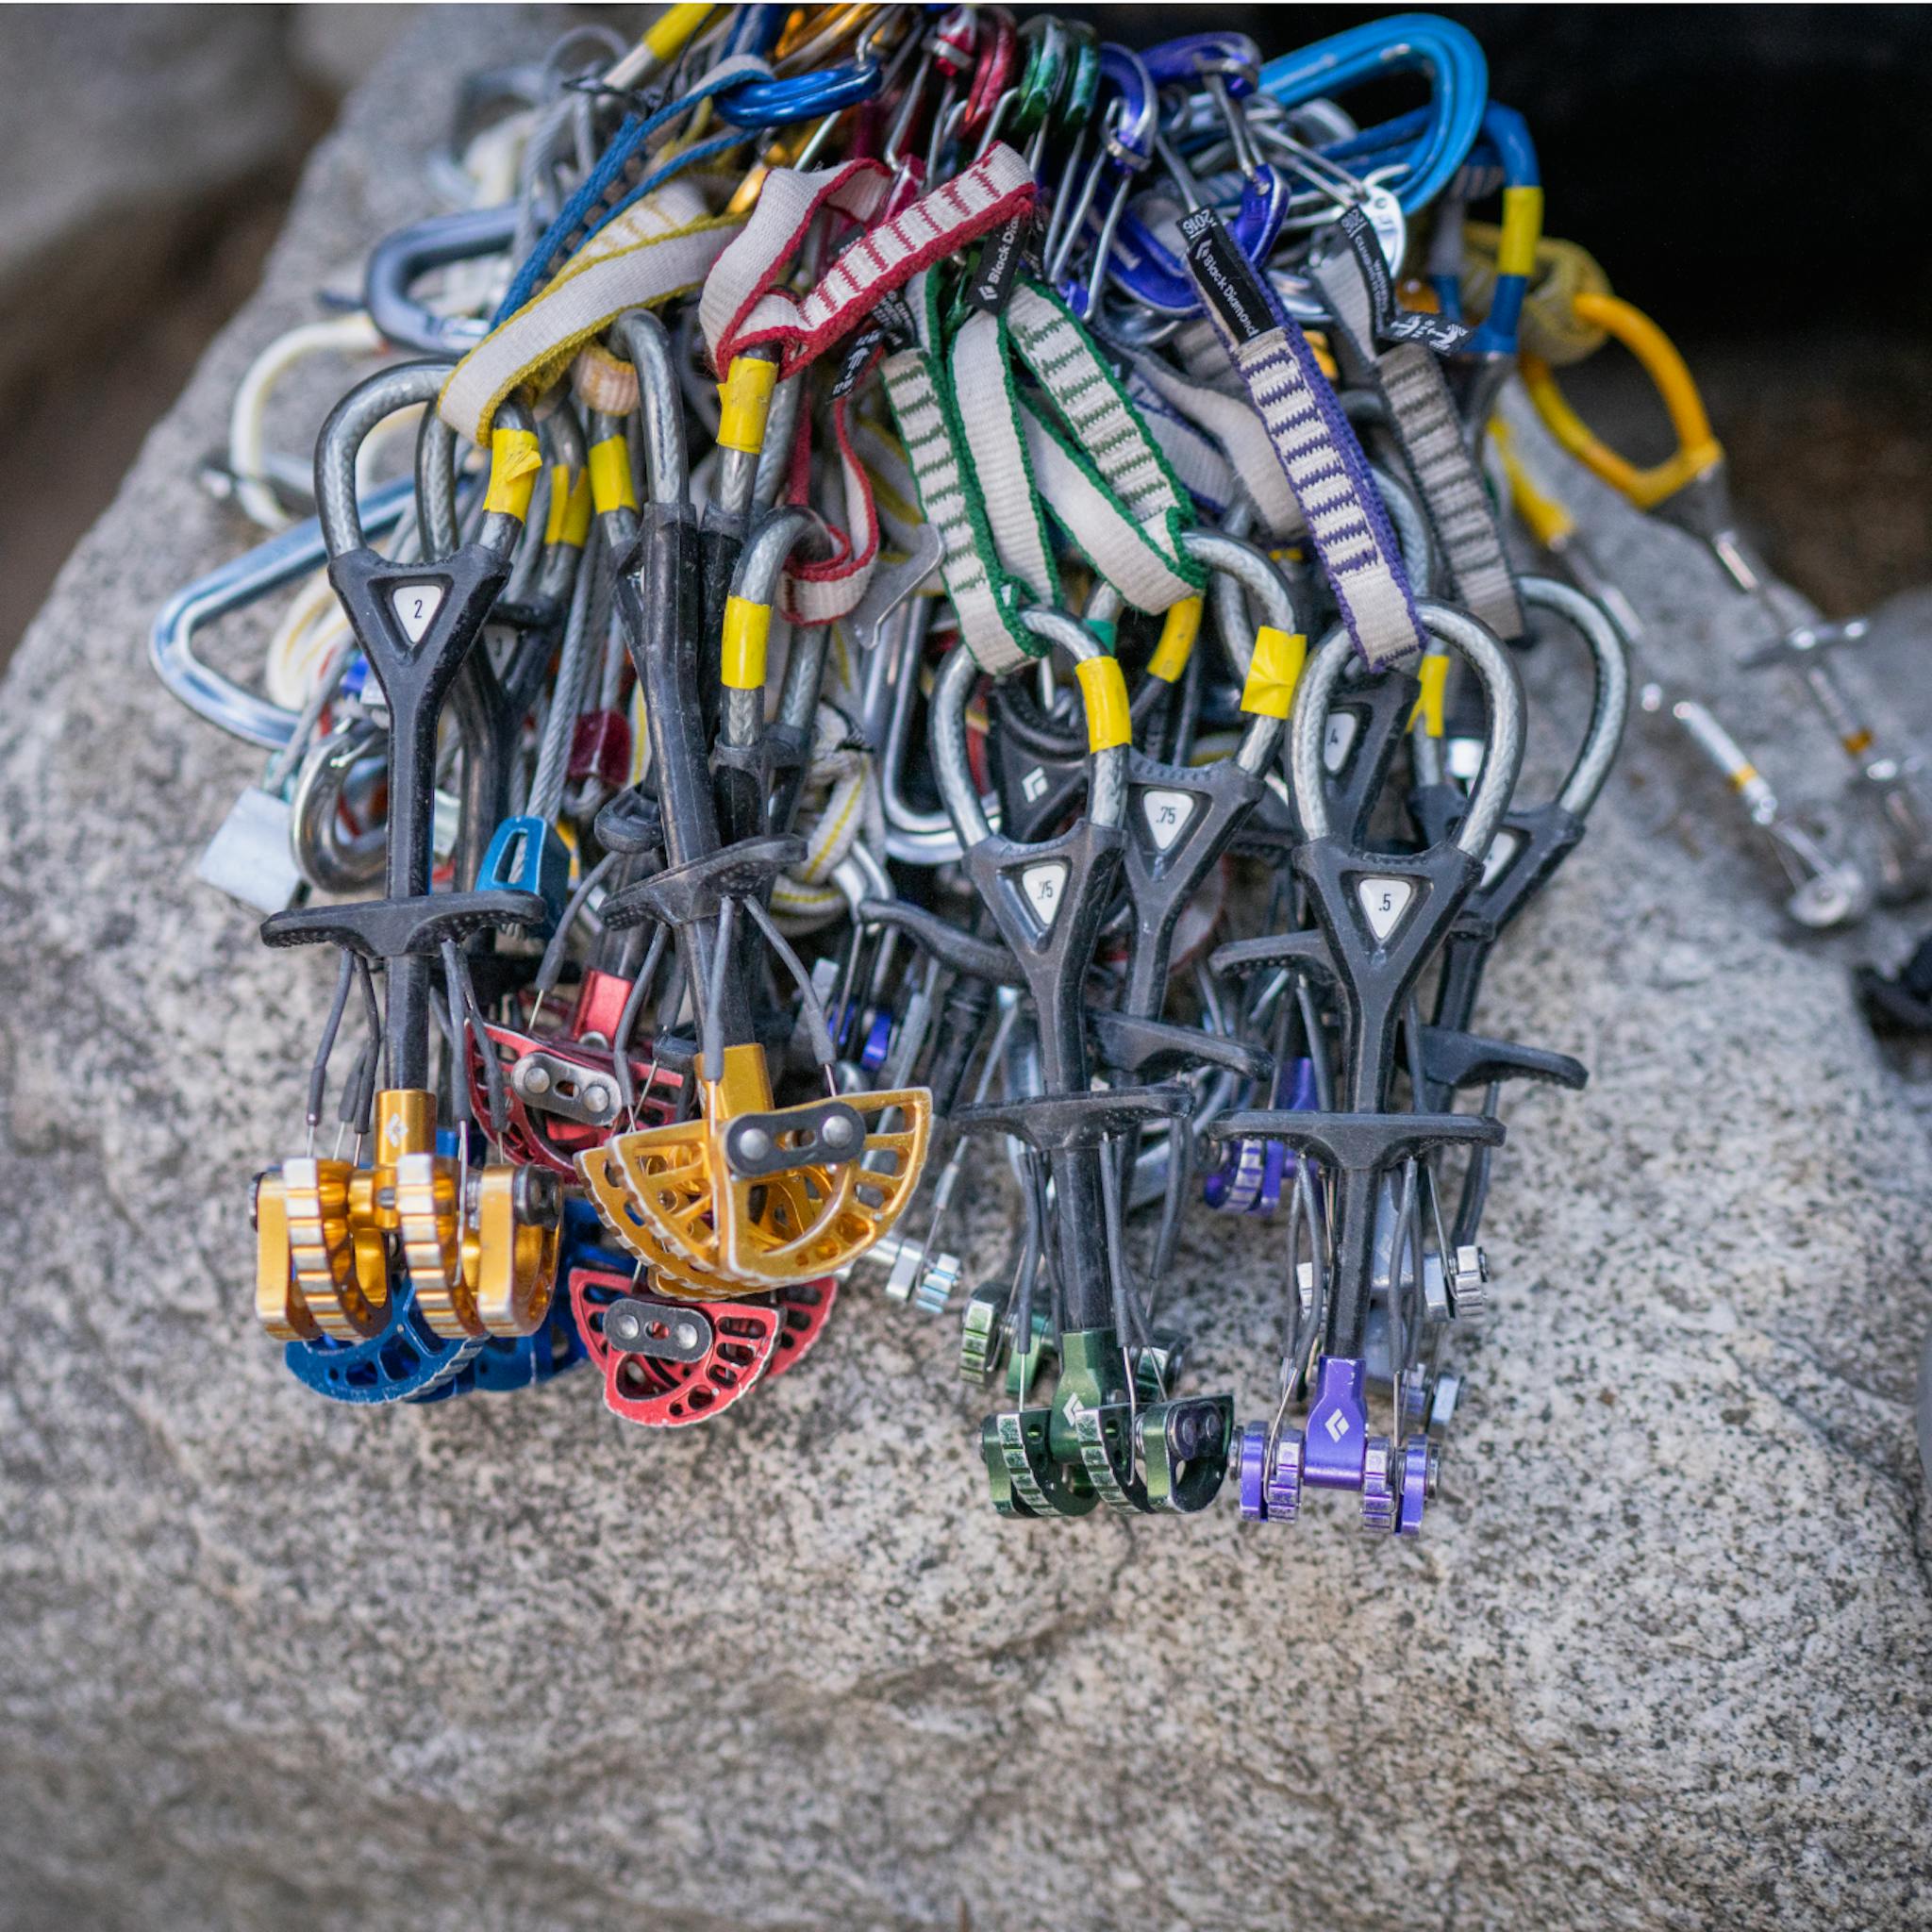 Climbing Rack Basics: Building a Trad Rack